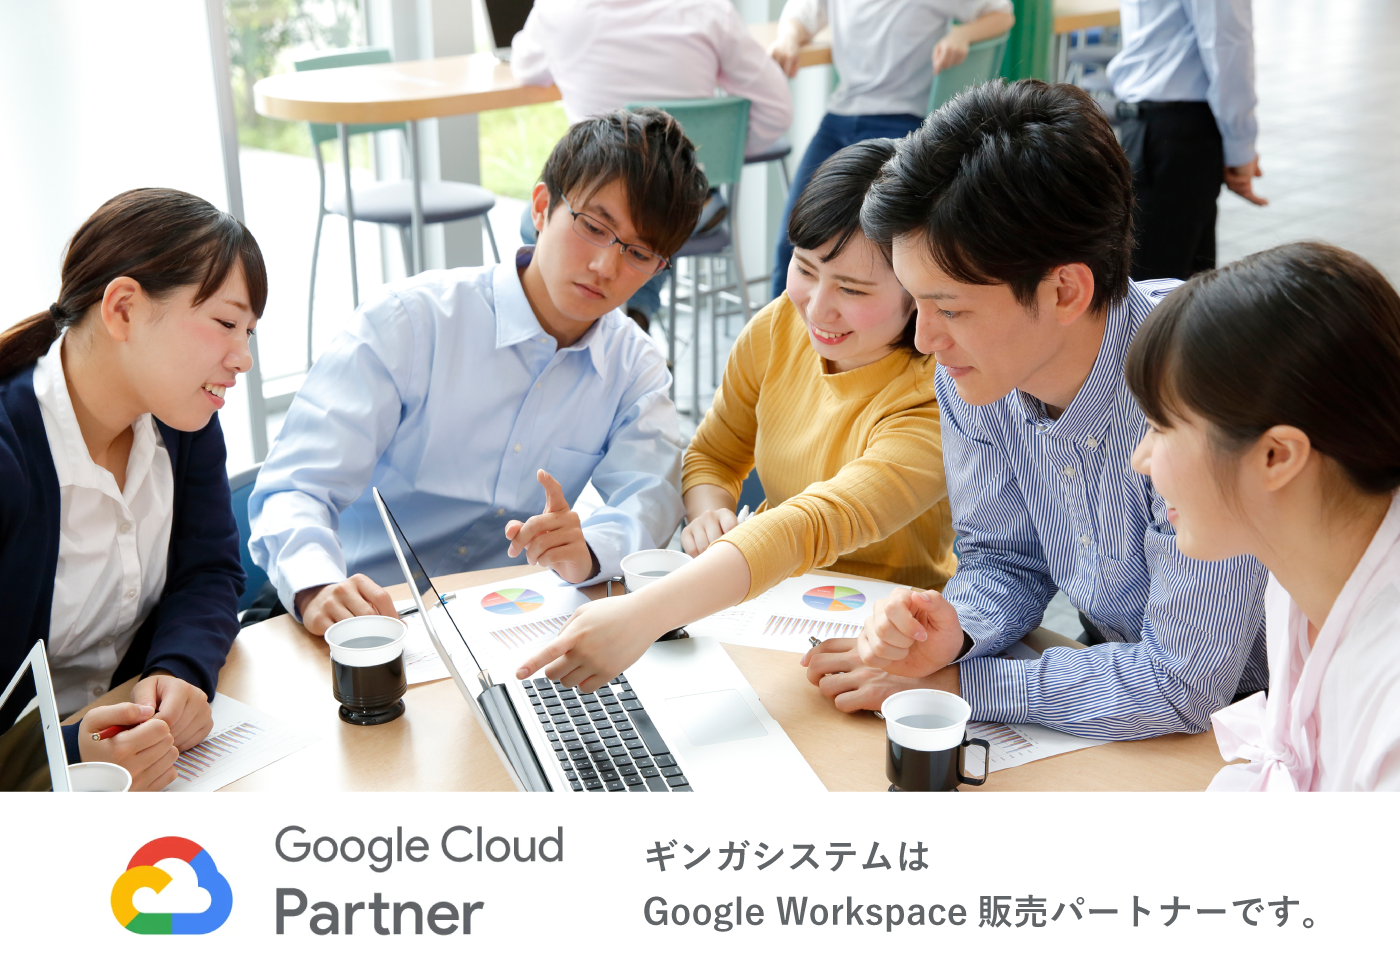 [Google Cloud Parter] ギンガシステムはGoogle Workspace 販売パートナーです。